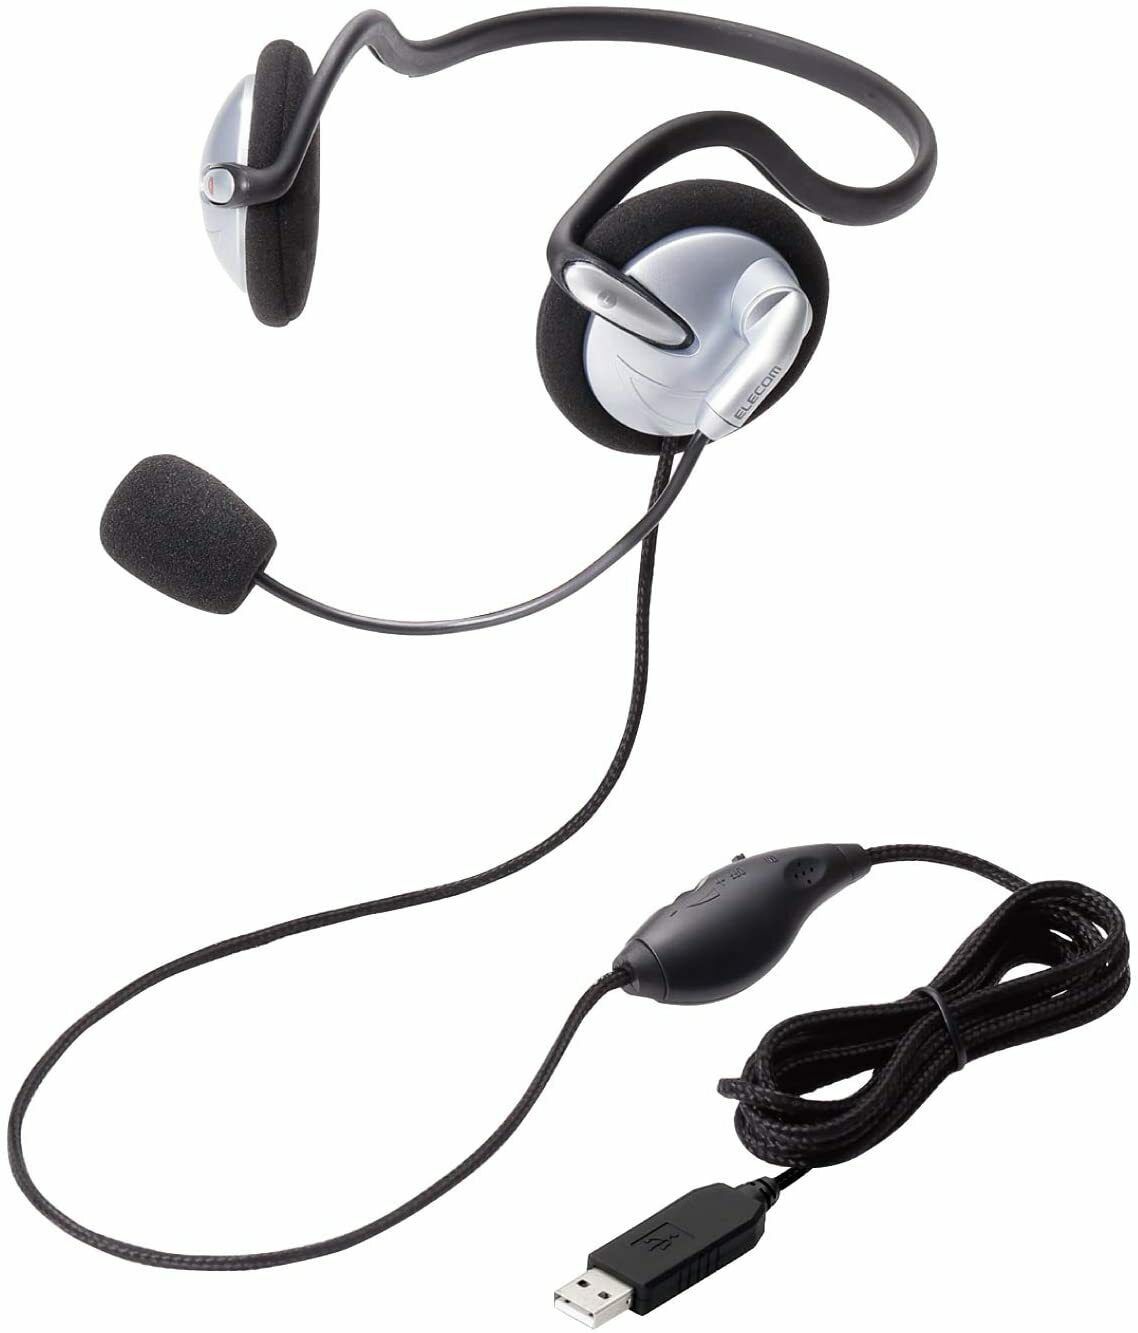 Elecom Headset Microphone PS4 Compatible USB Double Ear Neckband 1.8m HS-NB05USV